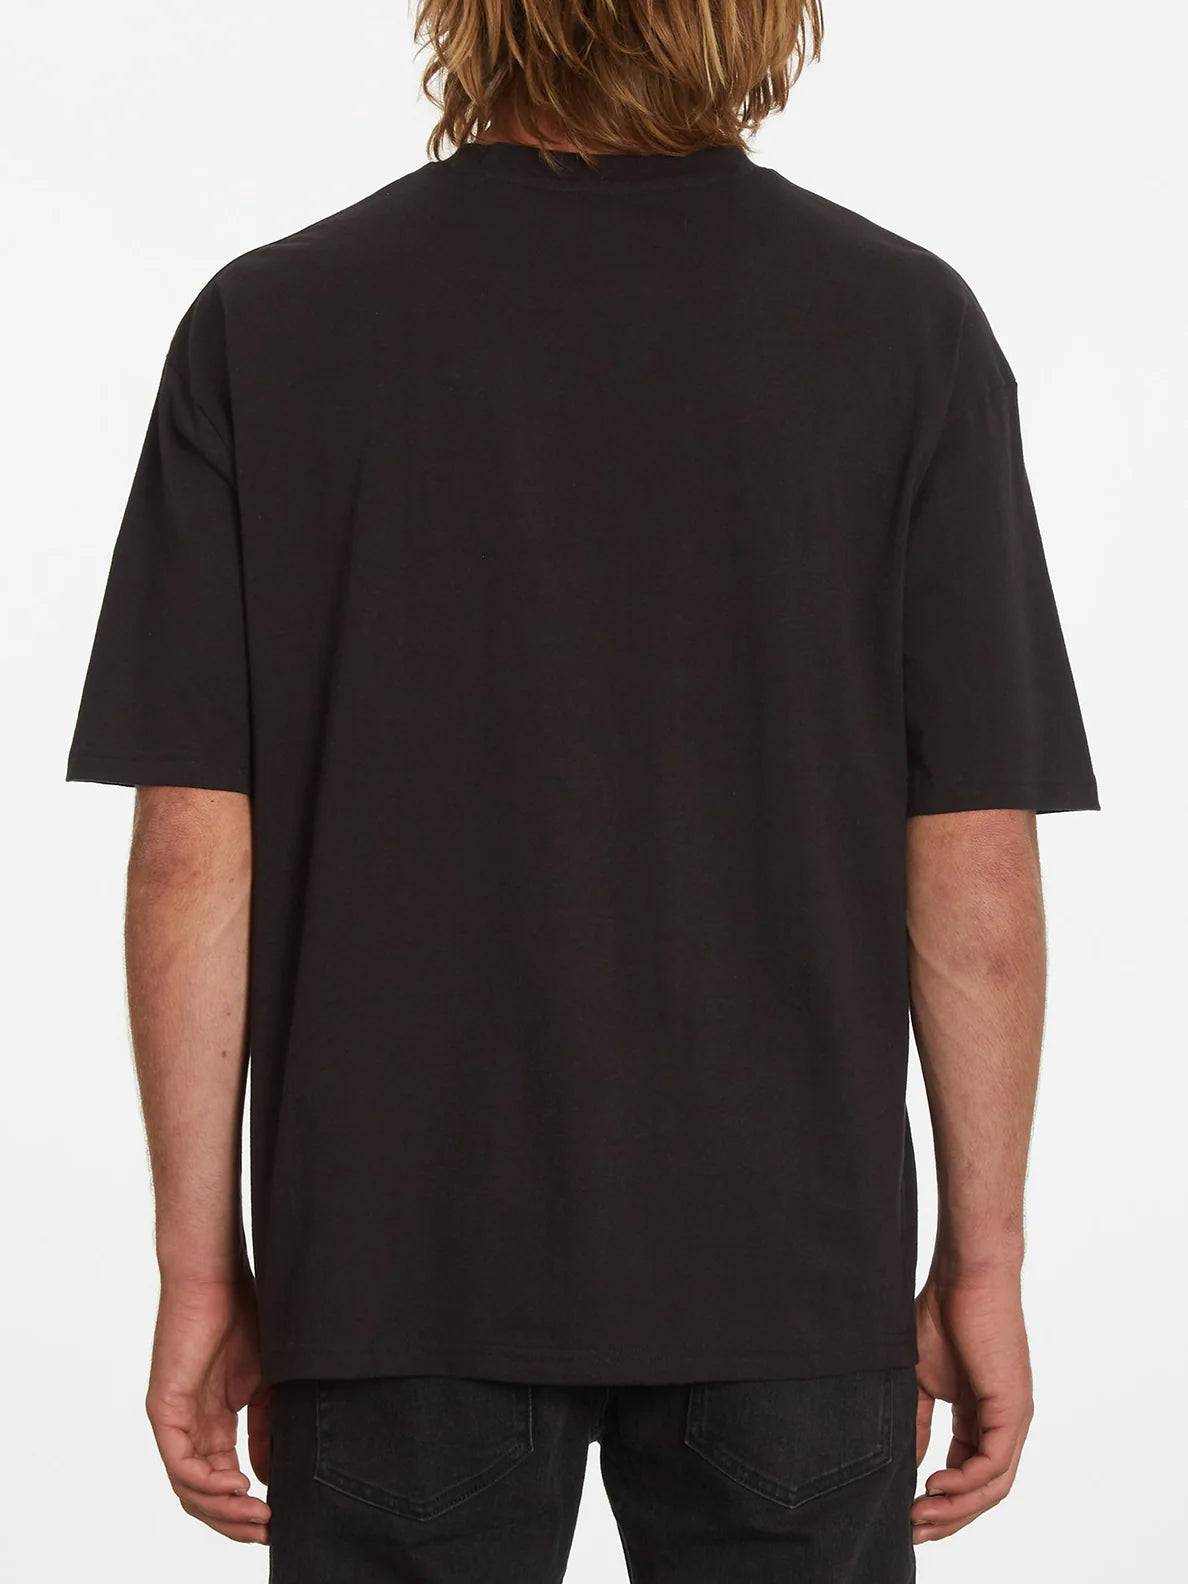 Camiseta Volcom Shredead Black